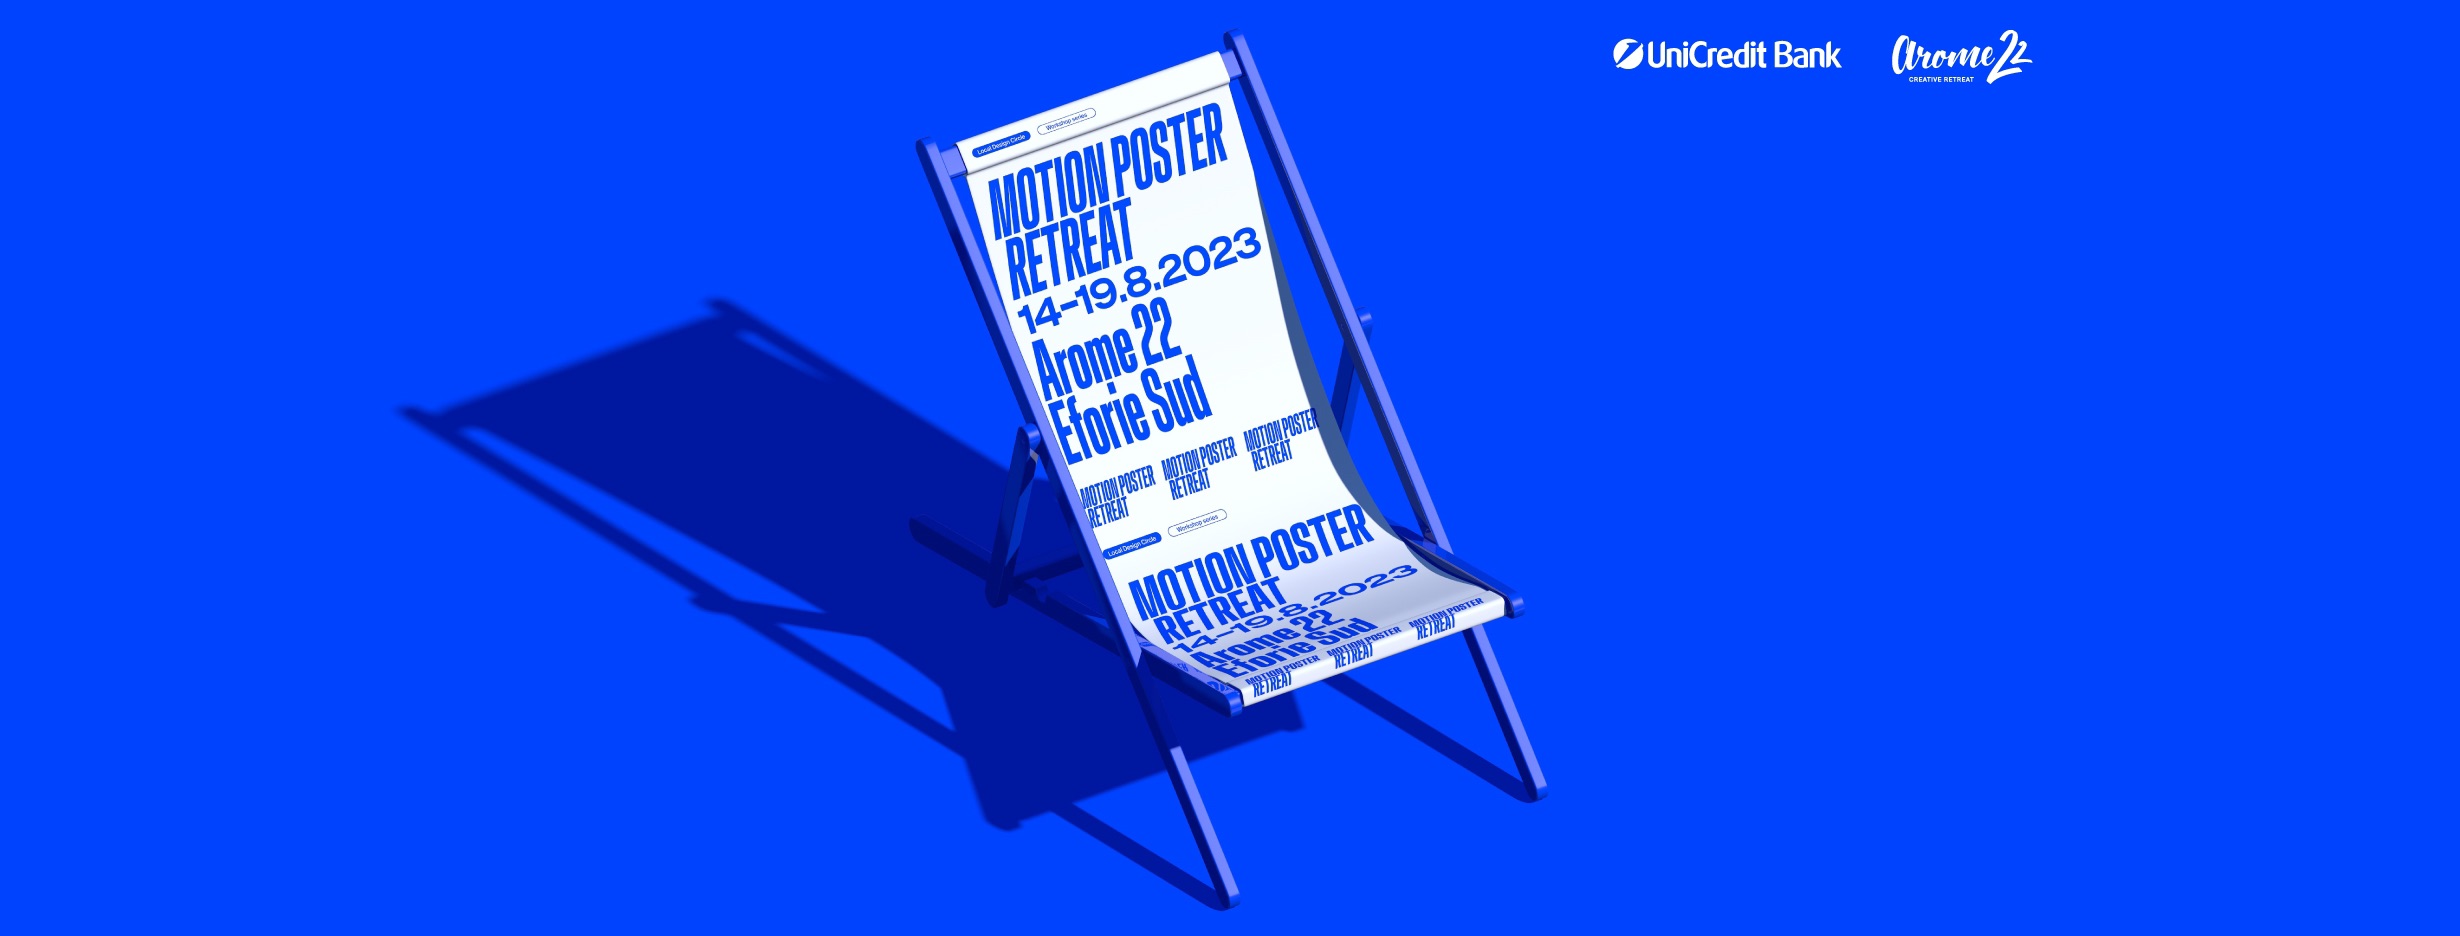 Motion Poster Retreat – Interactive Design Show